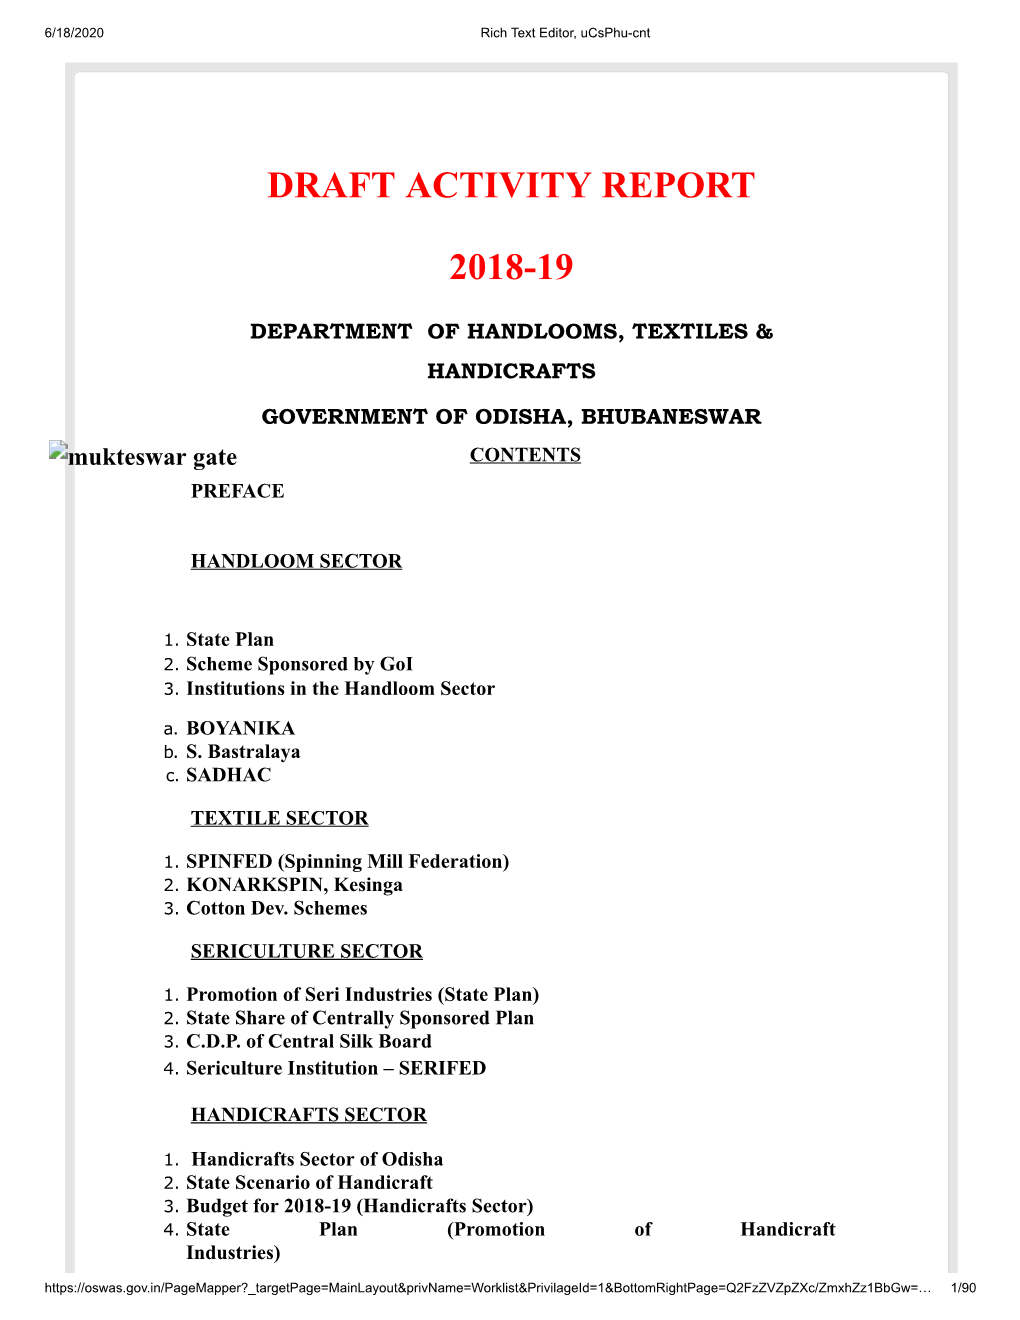 Draft Activity Report 2018-19